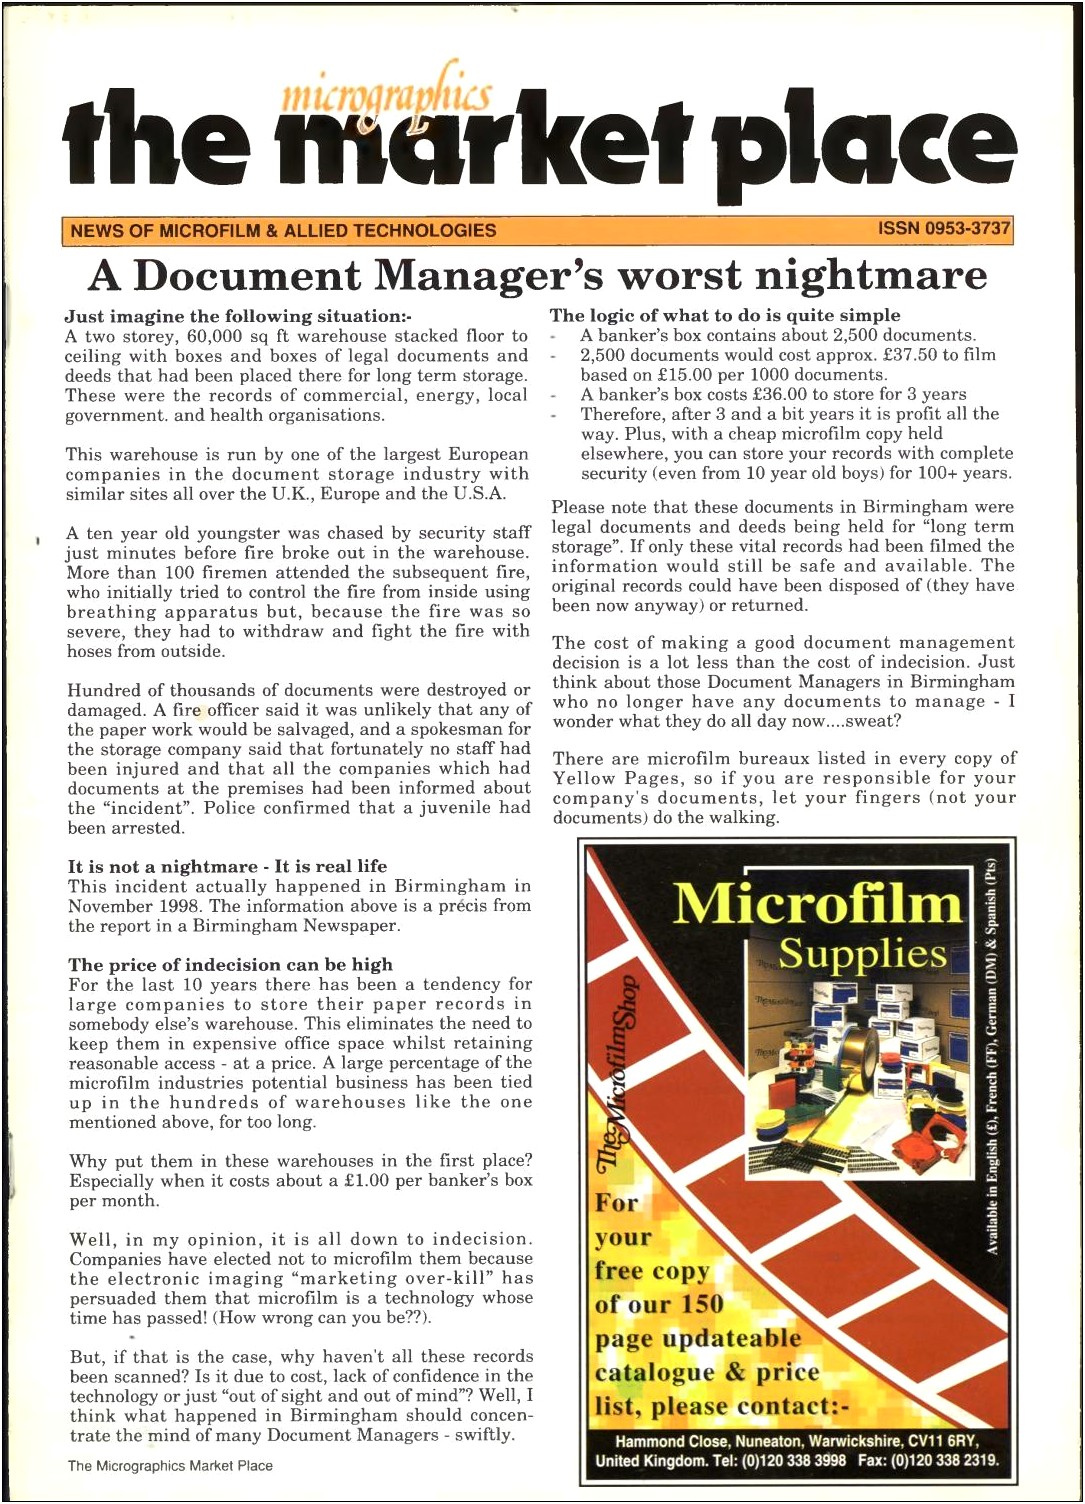 Bank Microfilm Data Enry Job Resume